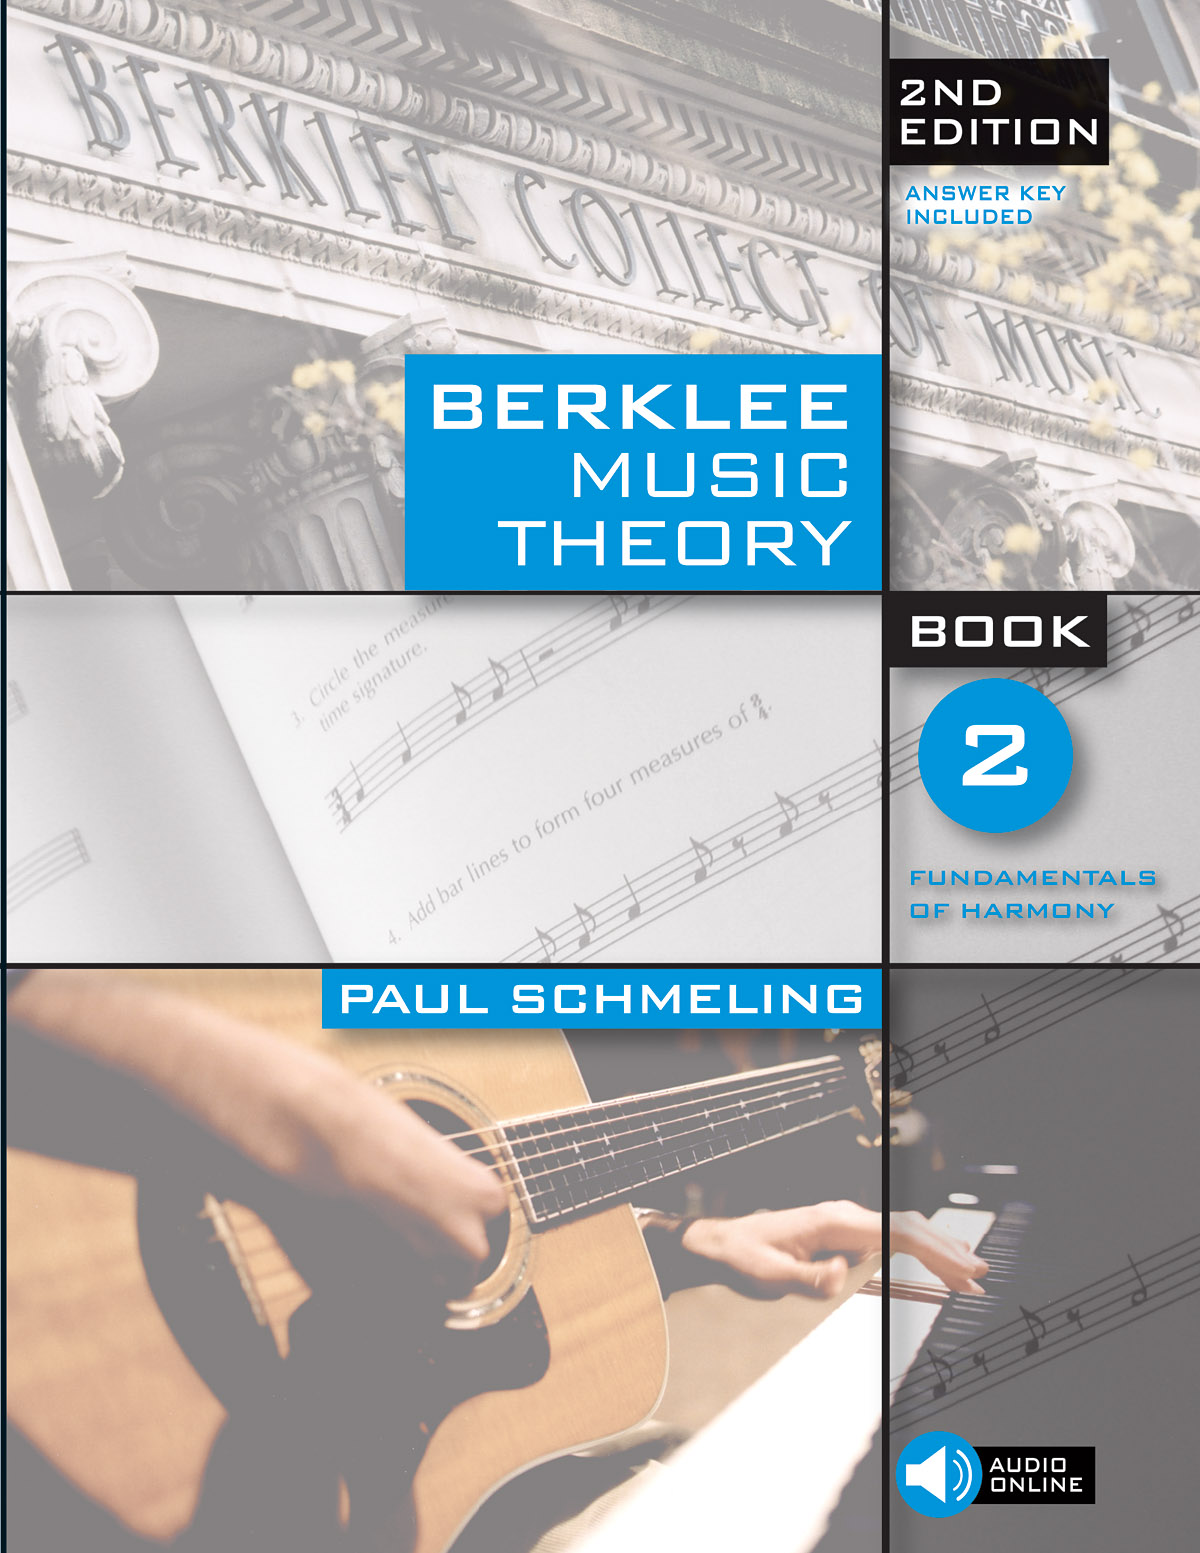 BERKLEE MUSIC THEORY BOOK 2  2ND EDITION: Theory